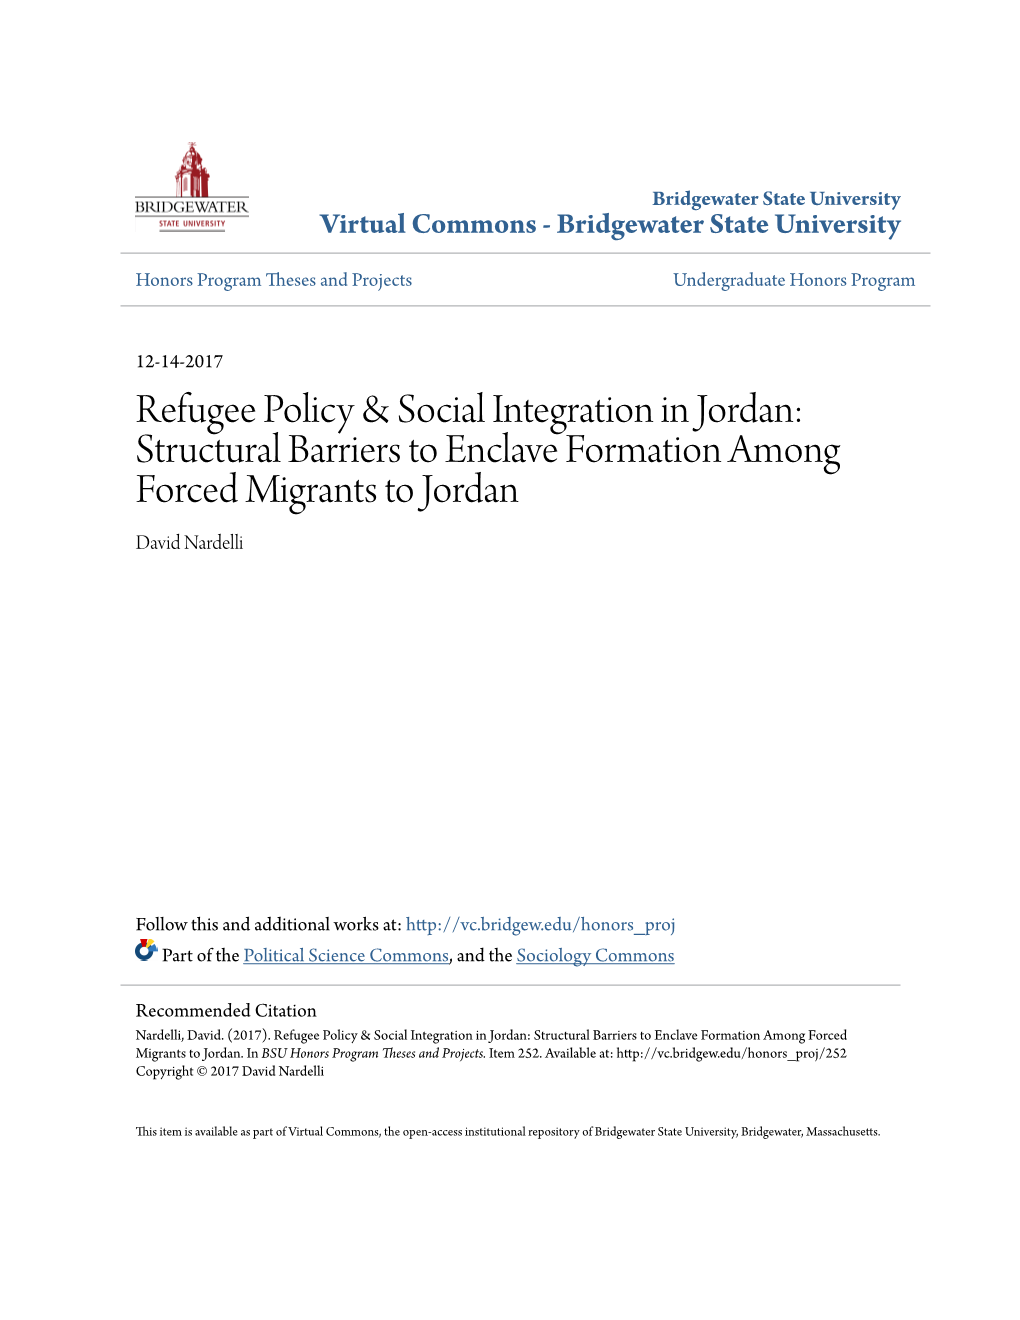 Refugee Policy & Social Integration in Jordan